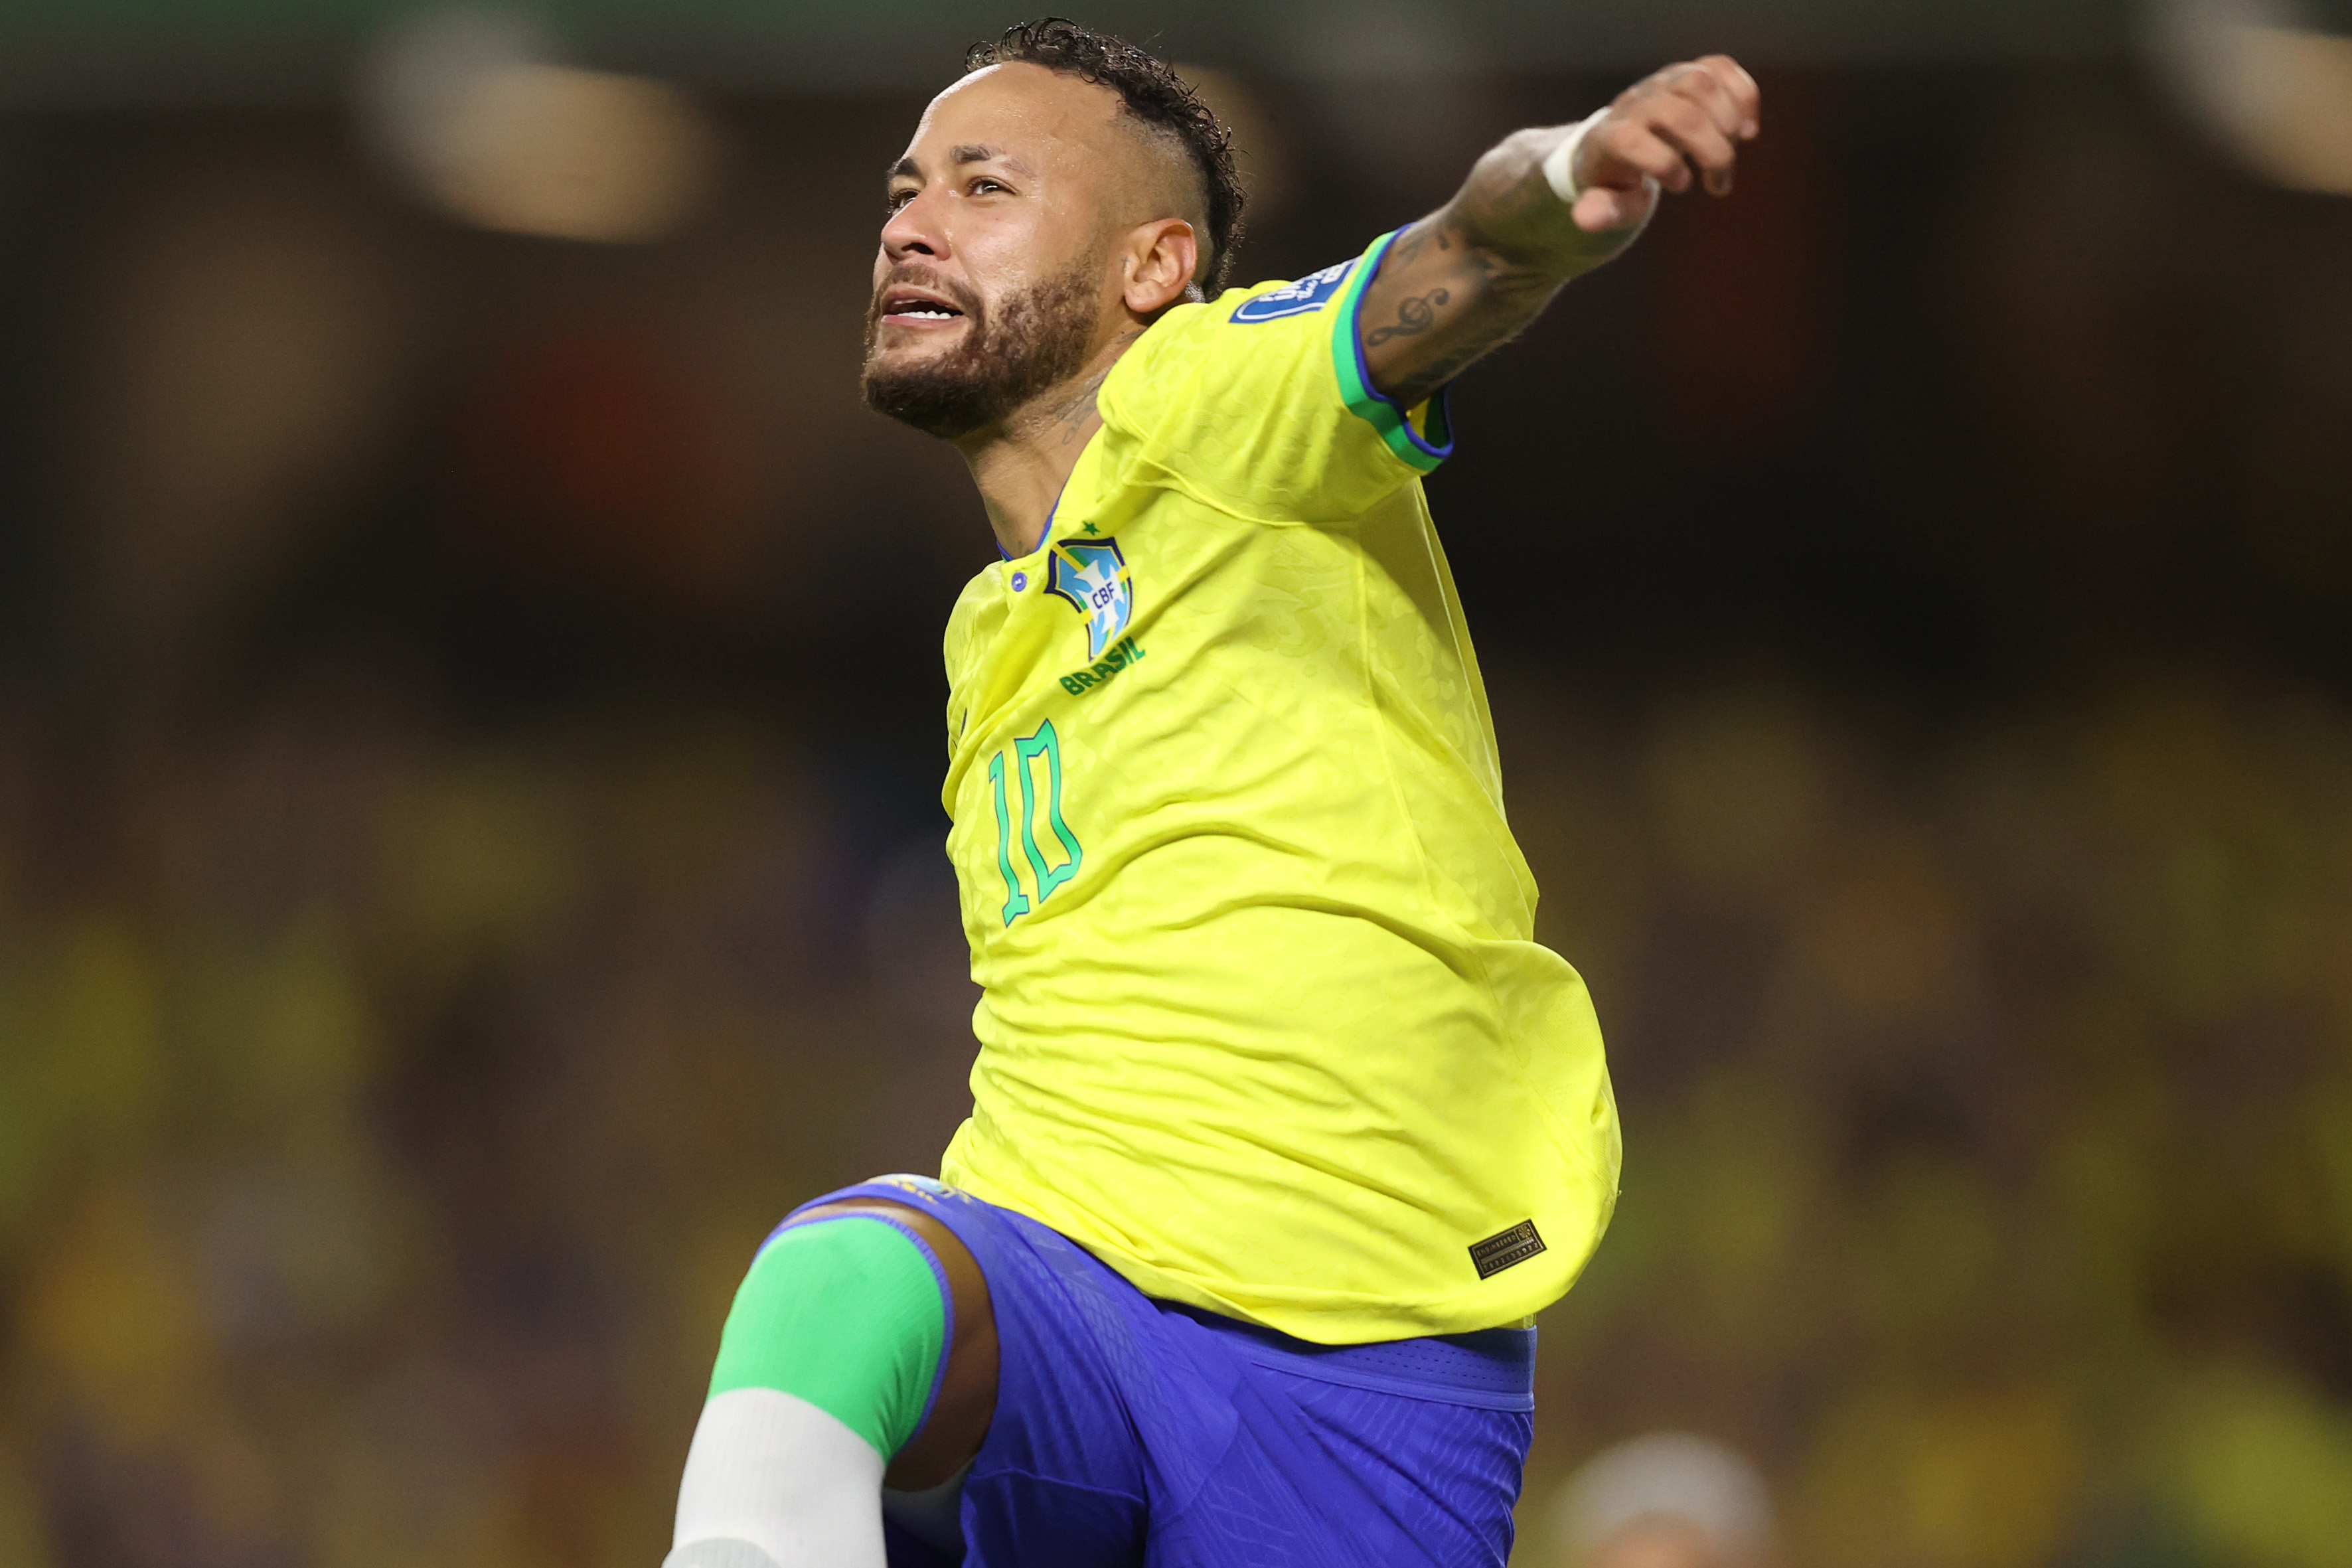 Uruguai 2-0 Brasil (17 de out, 2023) Placar Final - ESPN (BR)